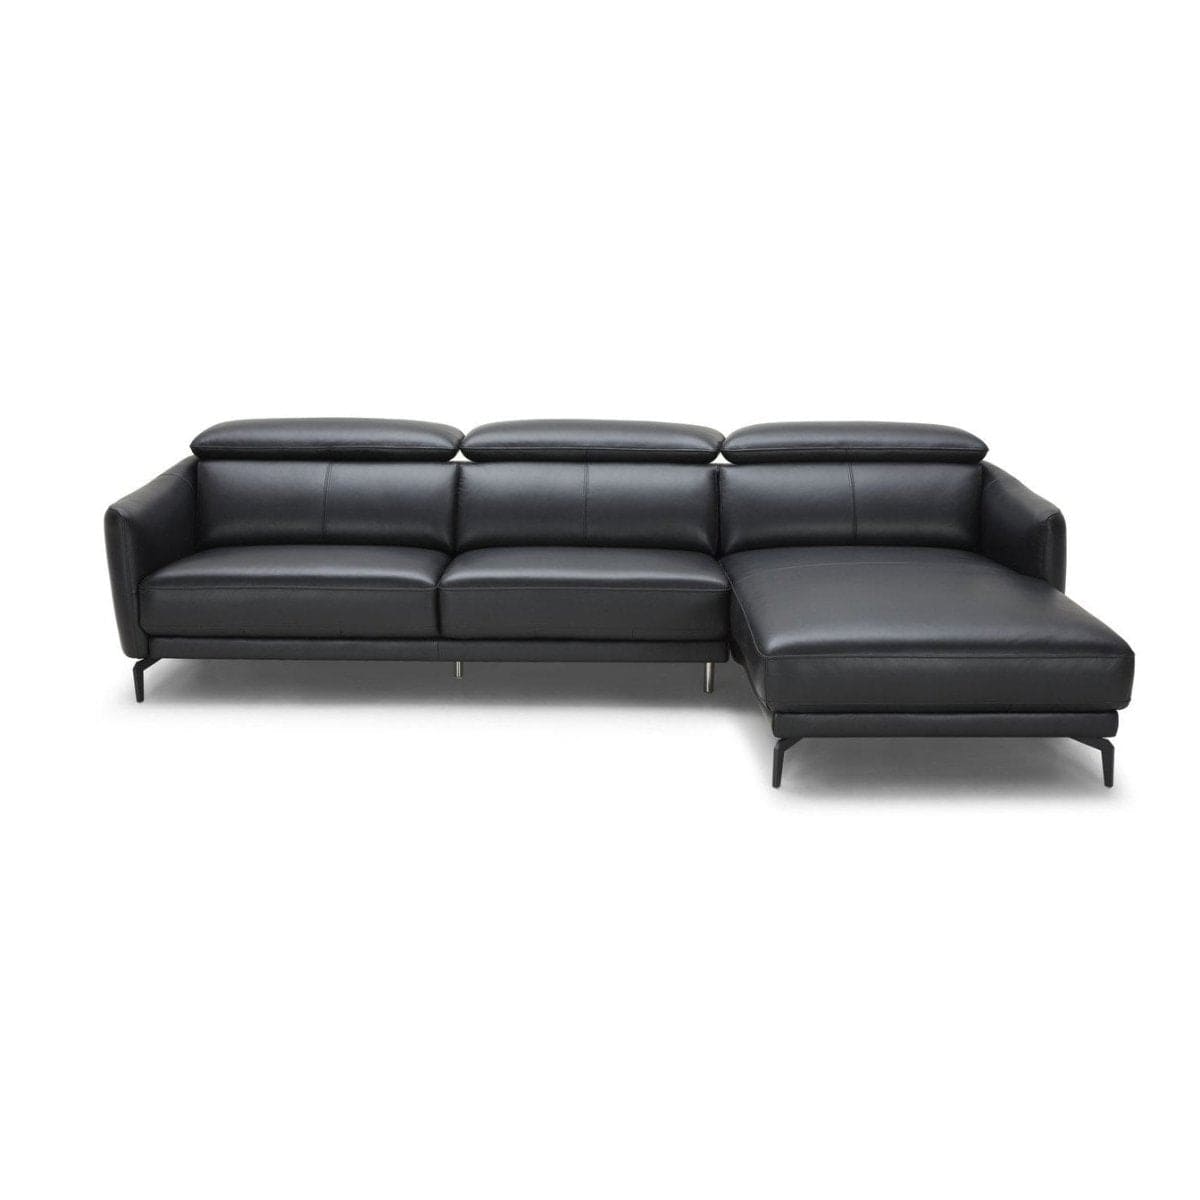 KUKA #5359 Full Leather Sofa Ottoman (M Series) (I) picket and rail